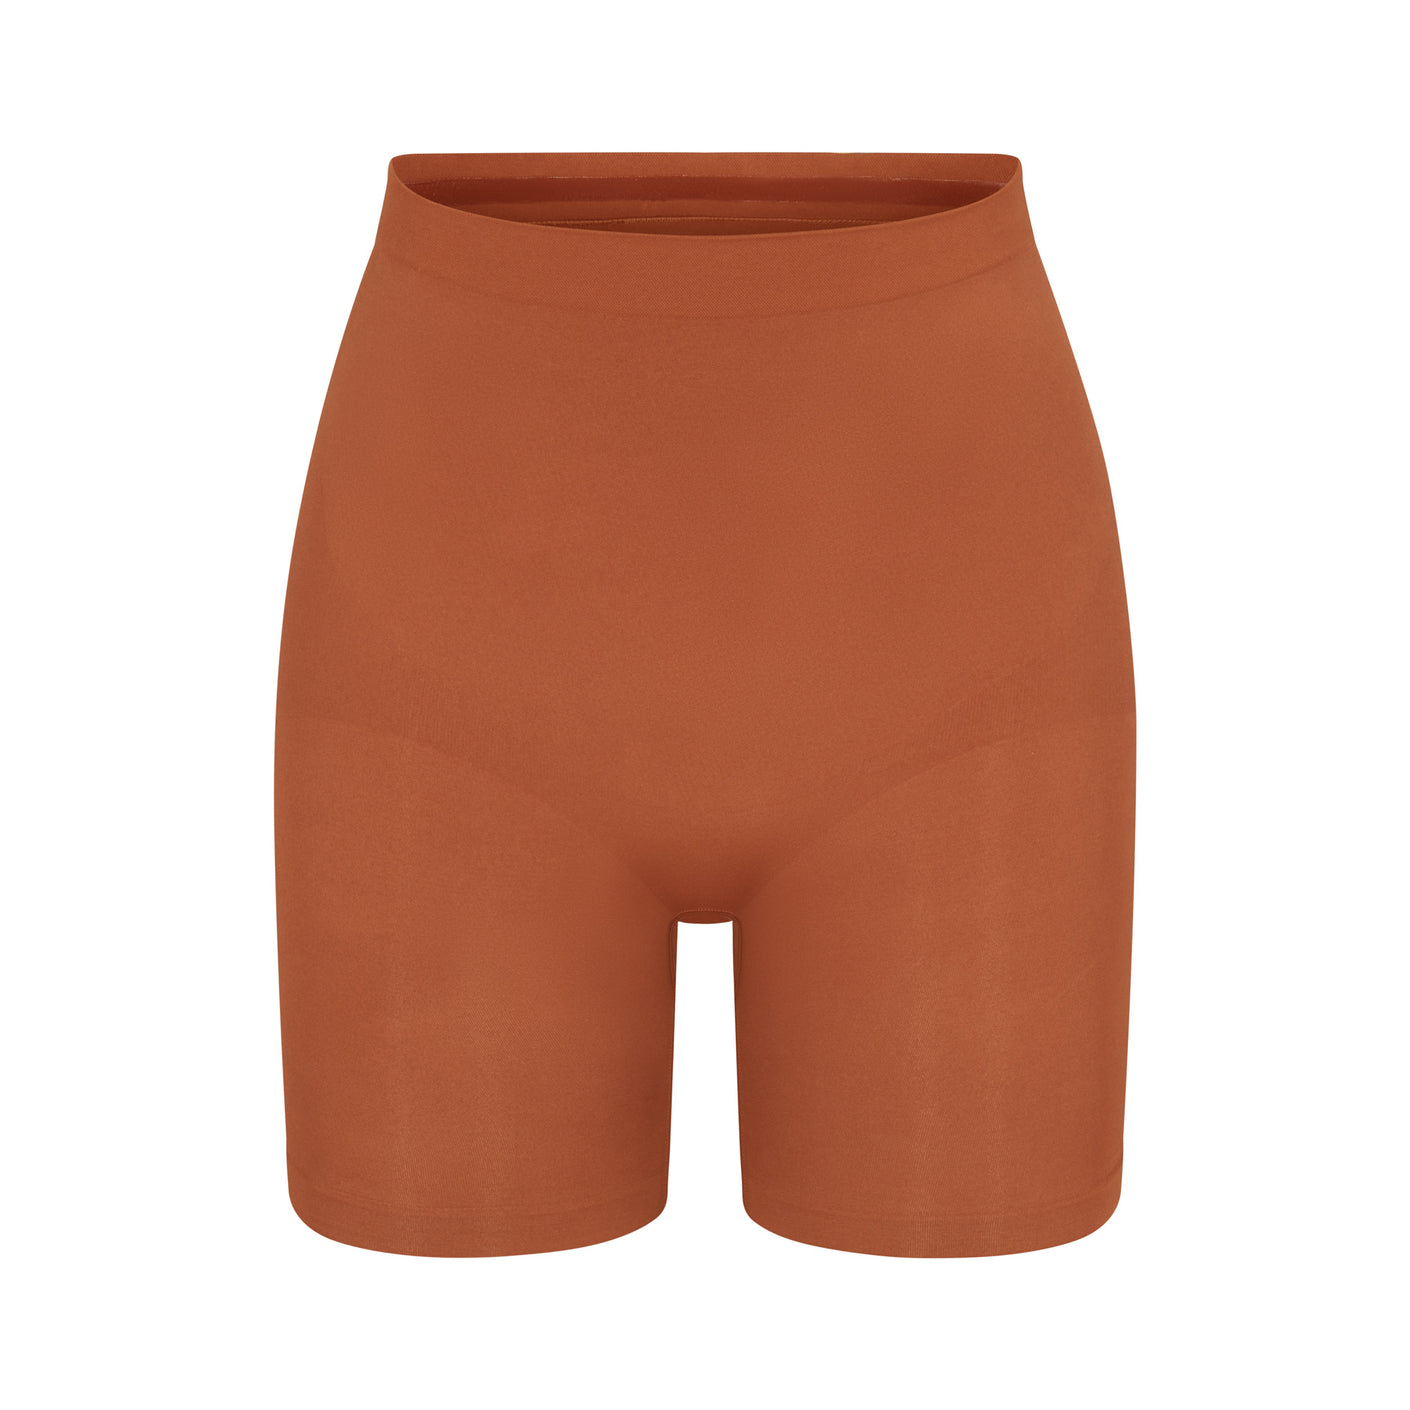 2 piece burnt orange skims set Top size XS shorts - Depop